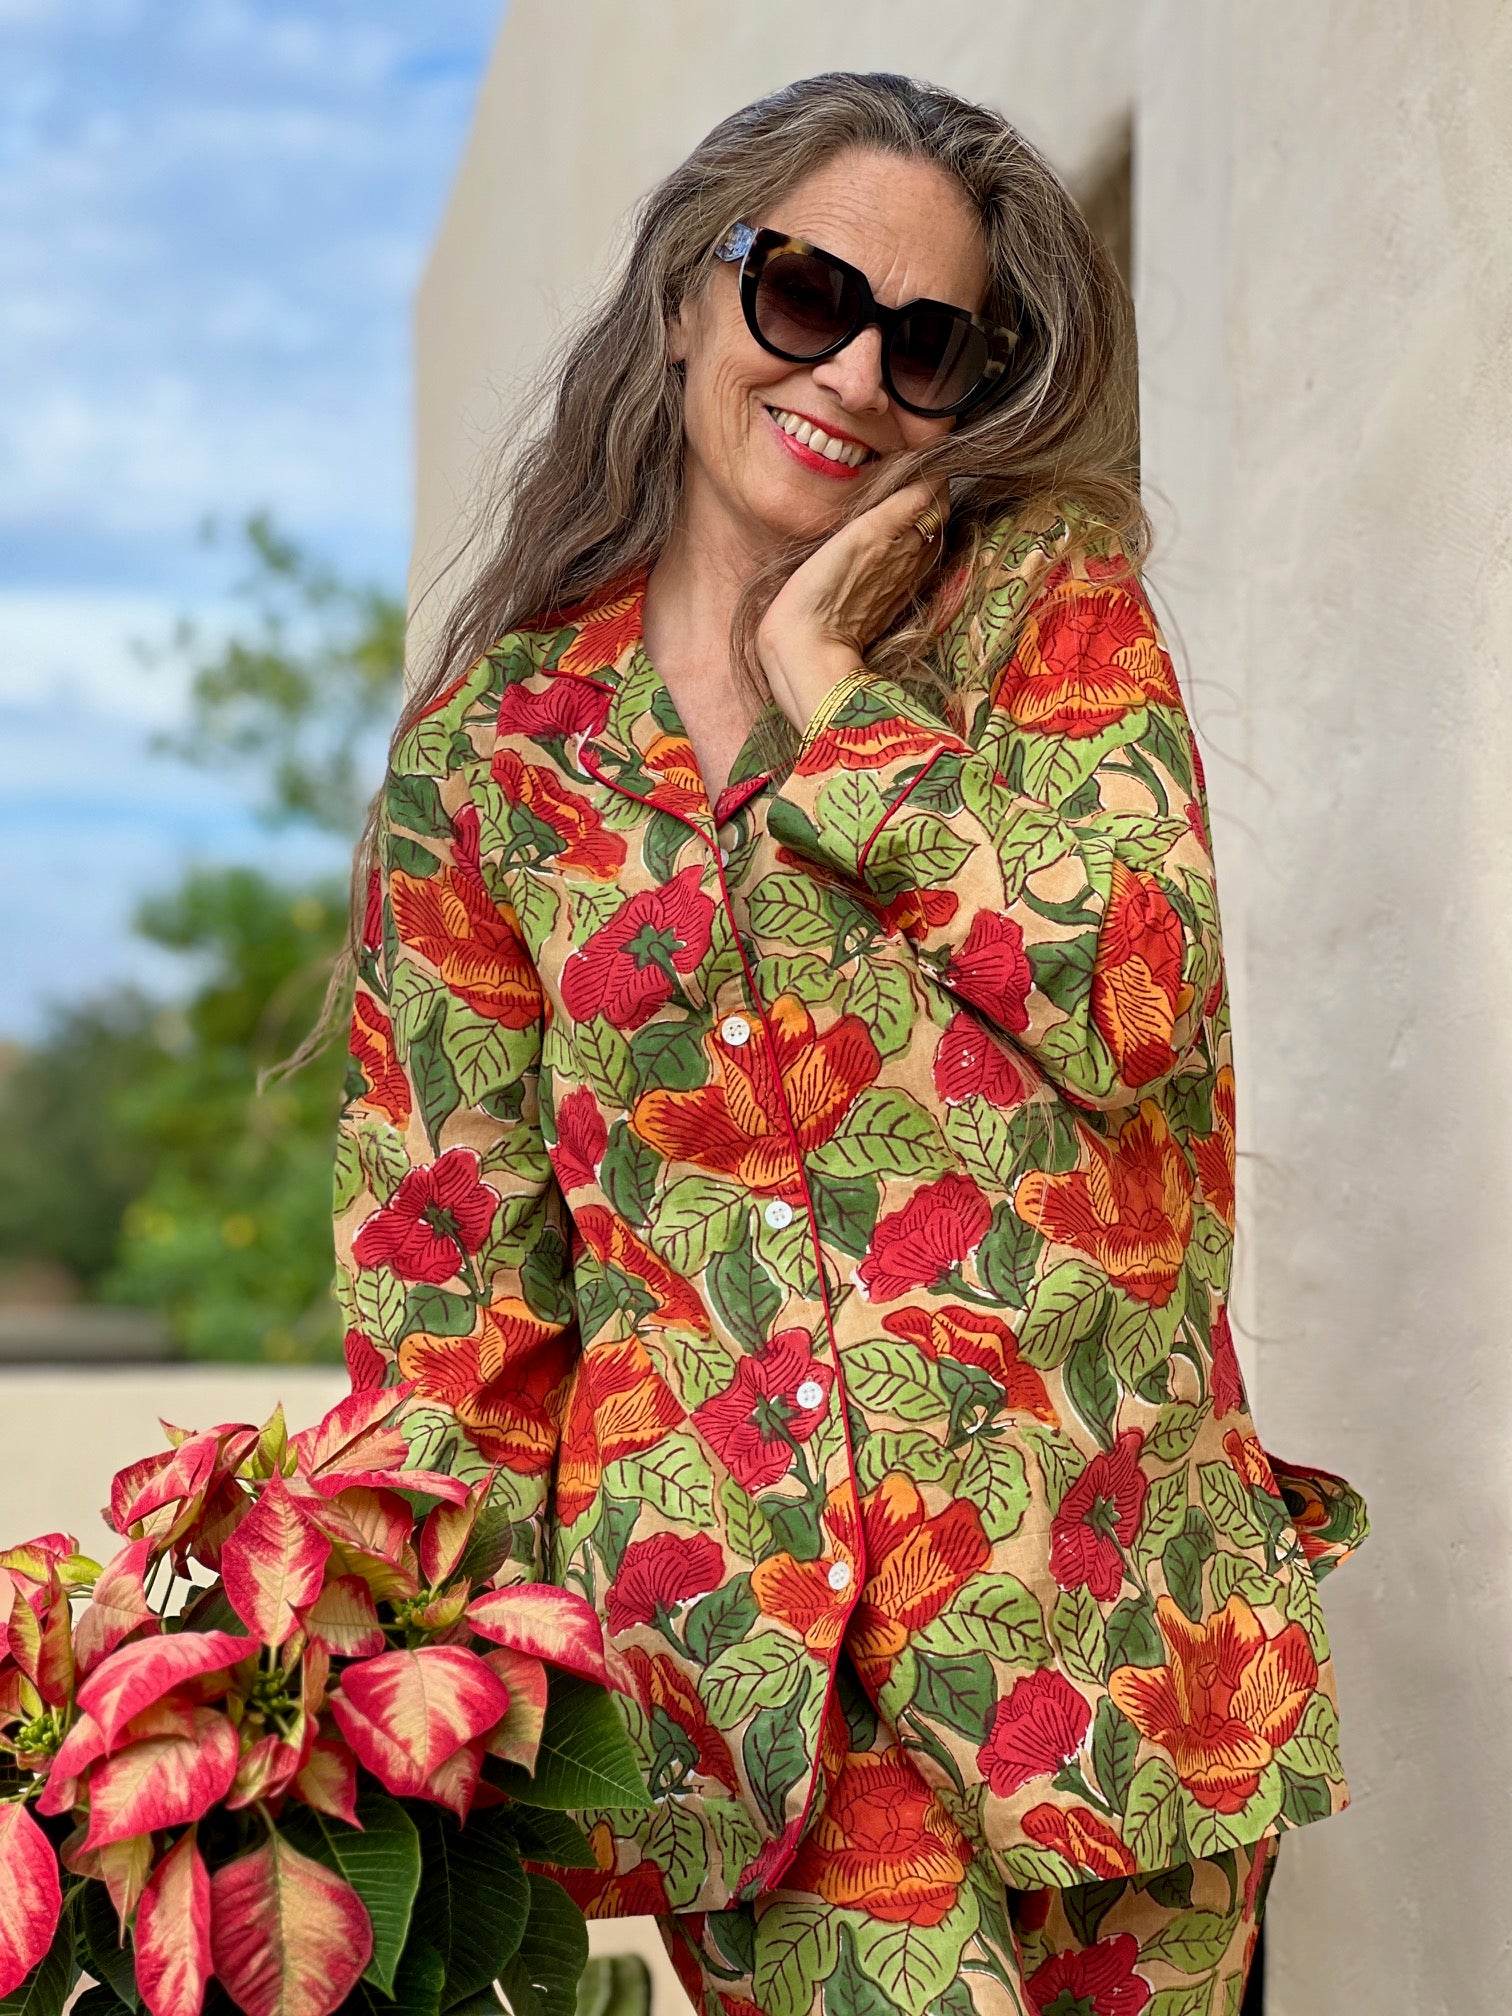 Frida Floral Cotton Long Sleeve Pajamas